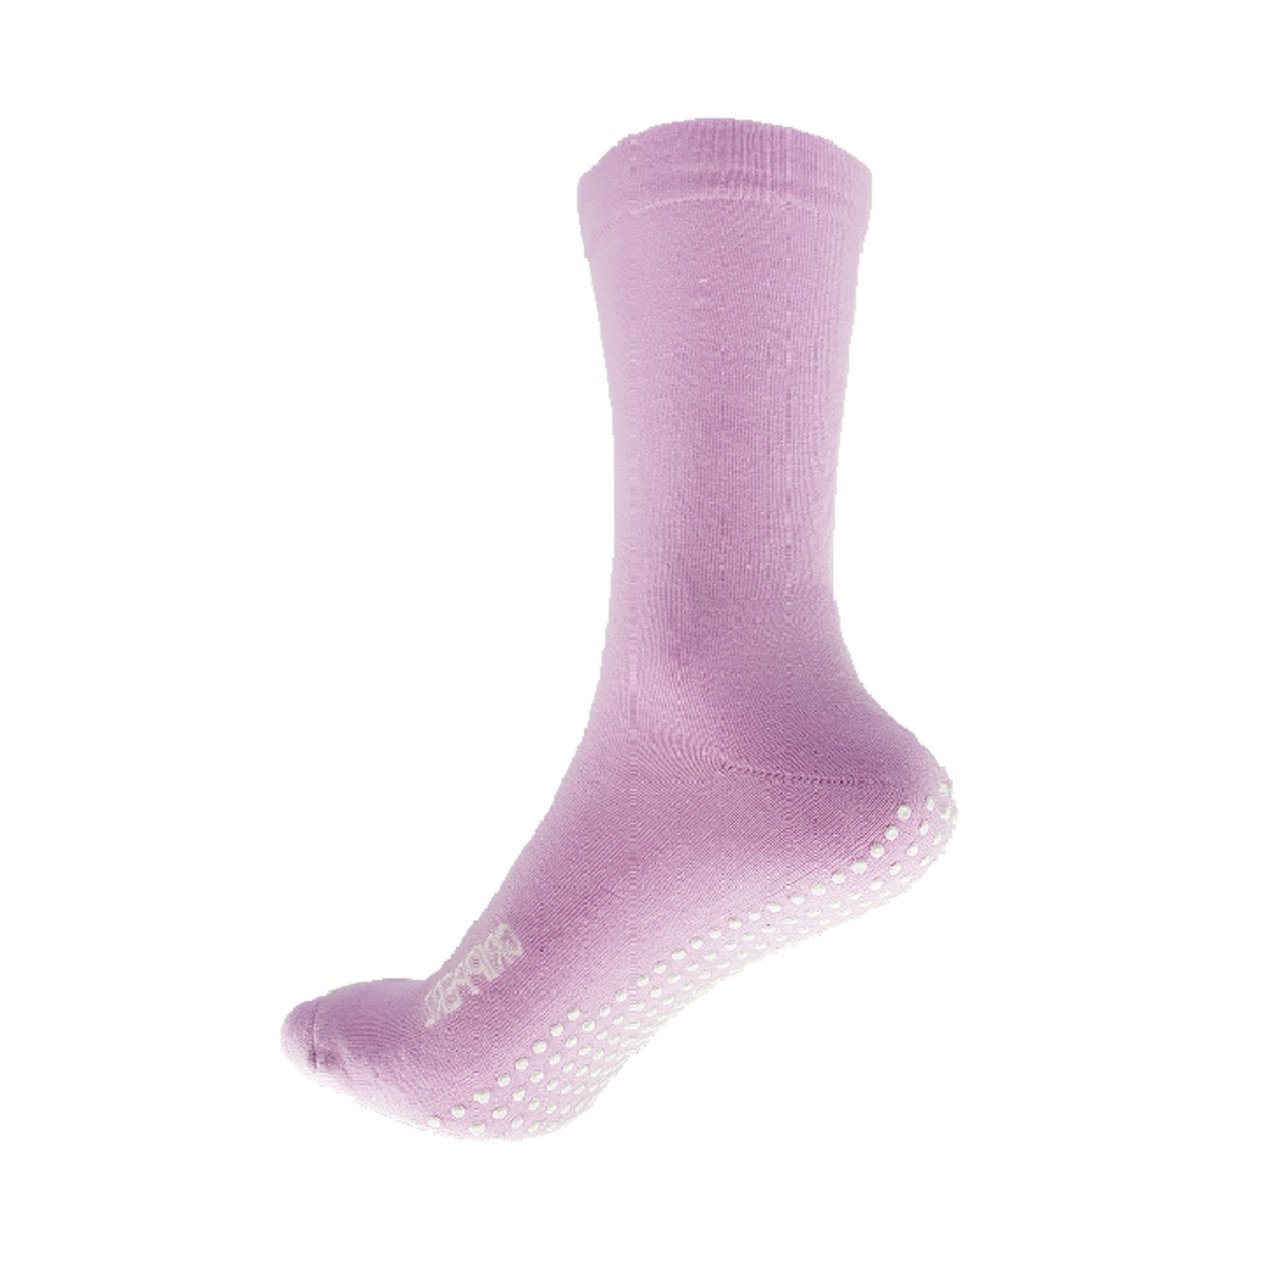 Gripperz Non Slip Socks Medium Pink Pair